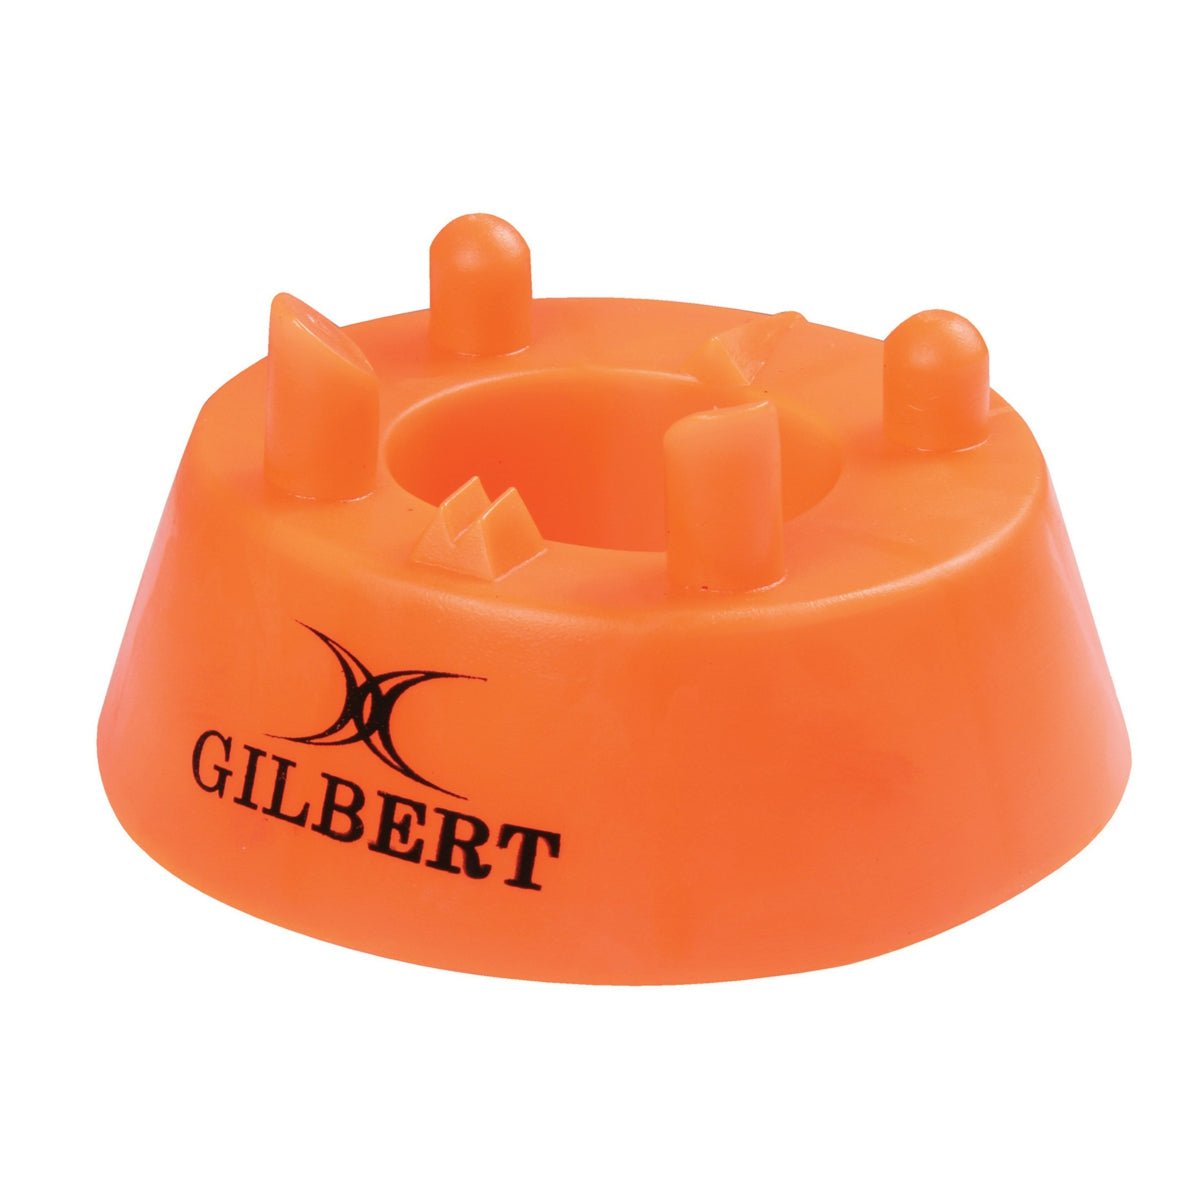 Gilbert Rugby Kicking Tee - 450 Orange - Kiwisport.de